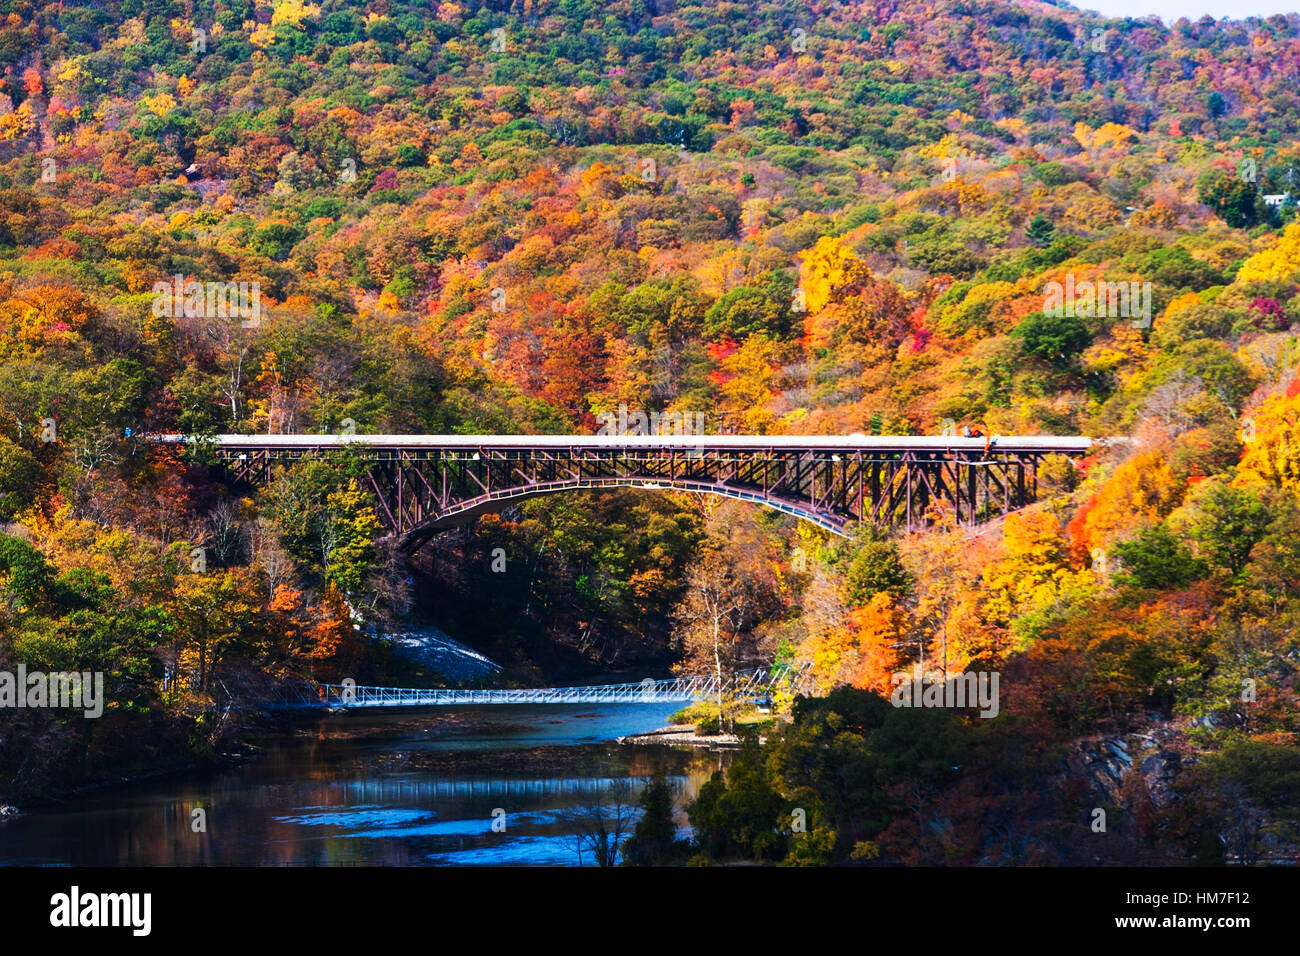 USA, New York, Bear Mountain with bridges above river Stock Photo